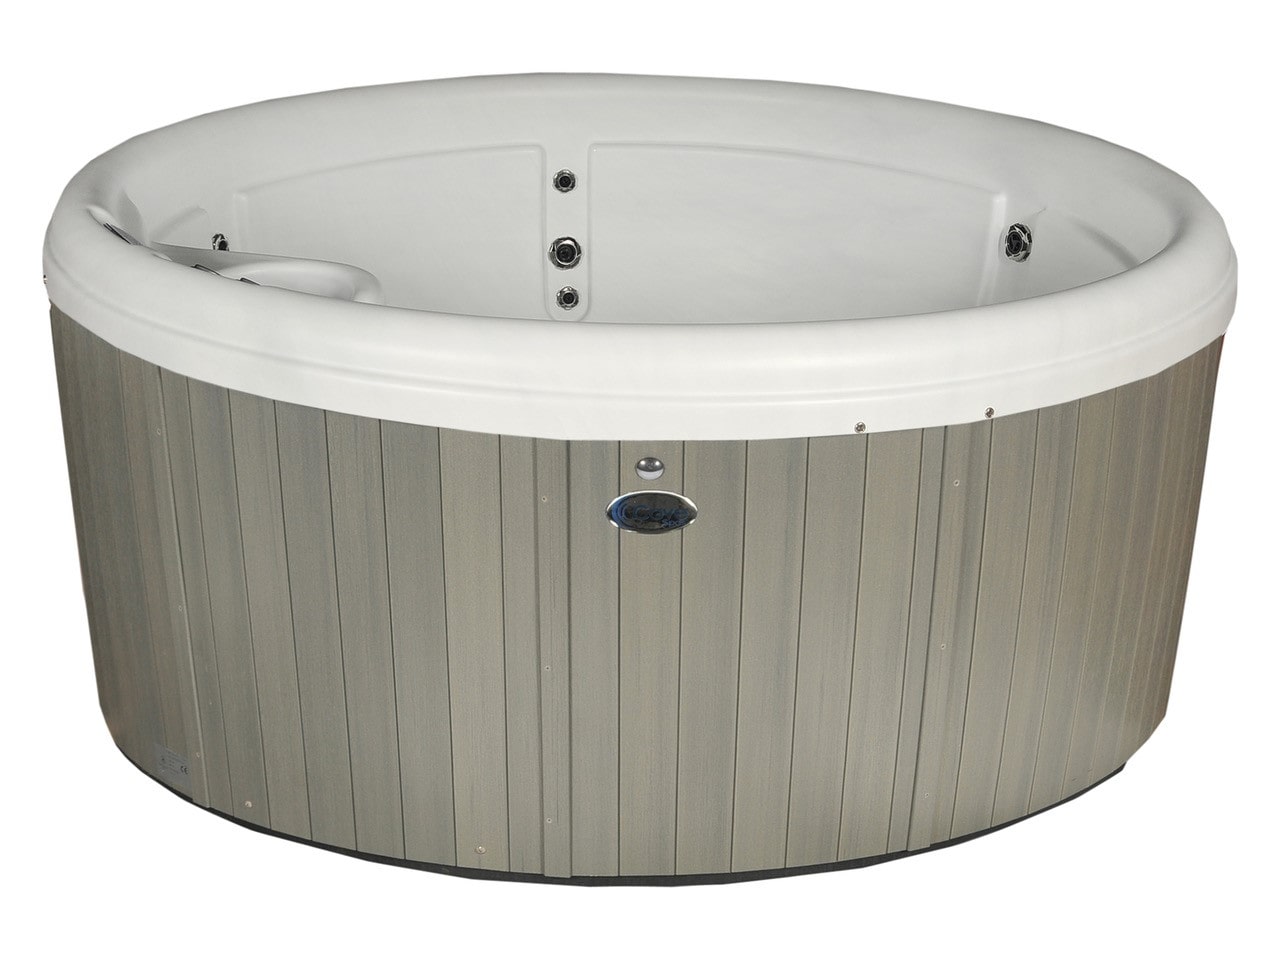 Compact holiday home hot tub